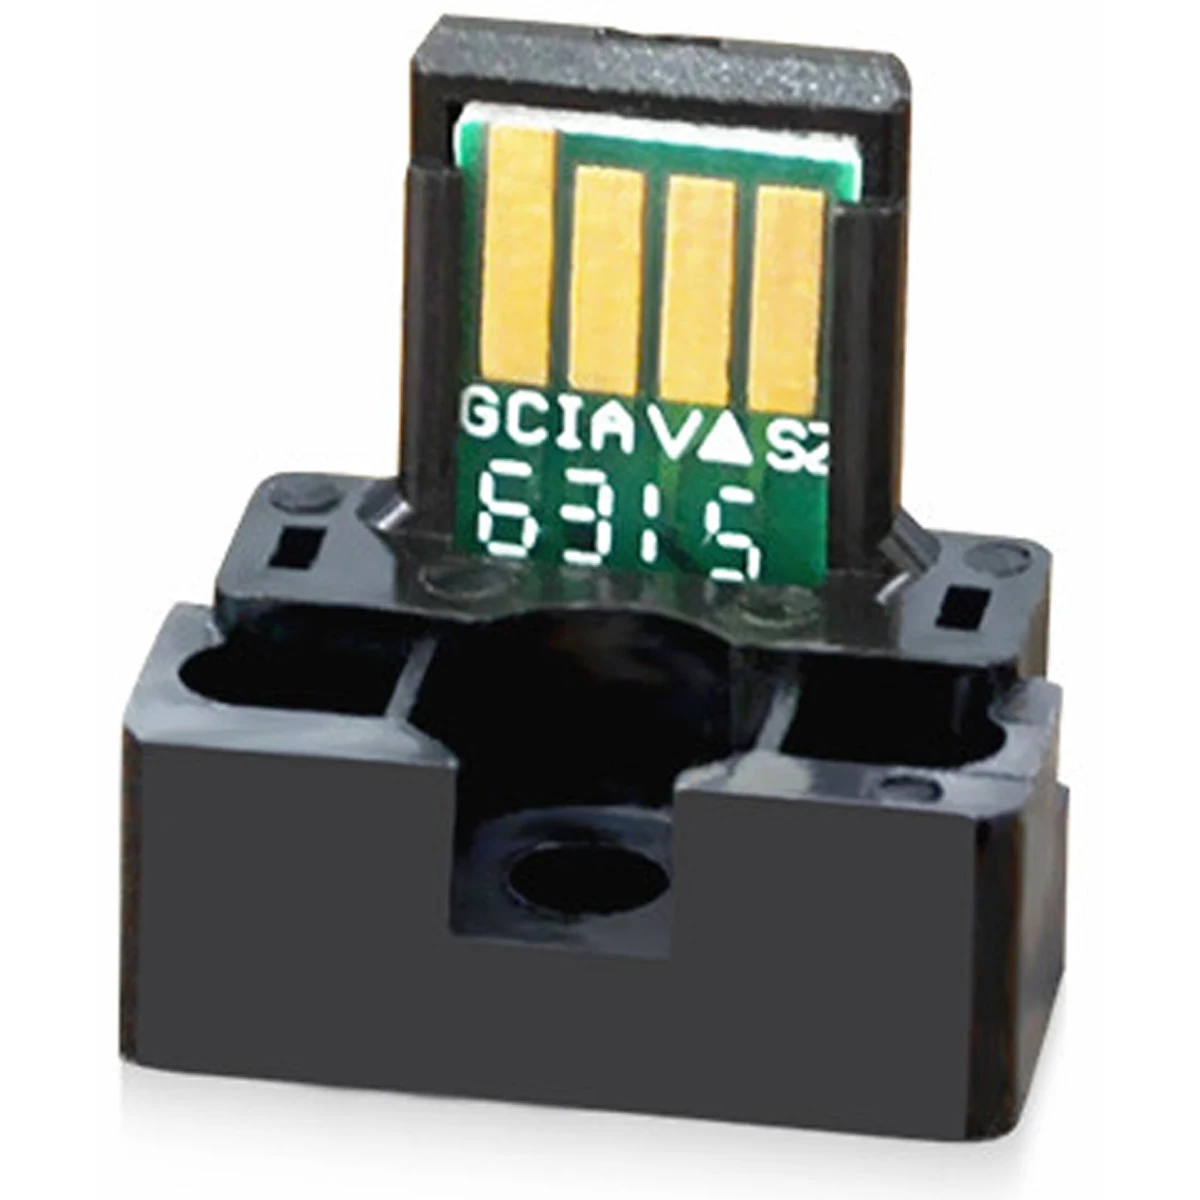 

MX237 Toner Cartridge Chip MX-237 For Sharp AR 6018D 6020D 6023D 6026N 6031N 6018 6020 6023 6026 6031 Printer Copier Black Chip